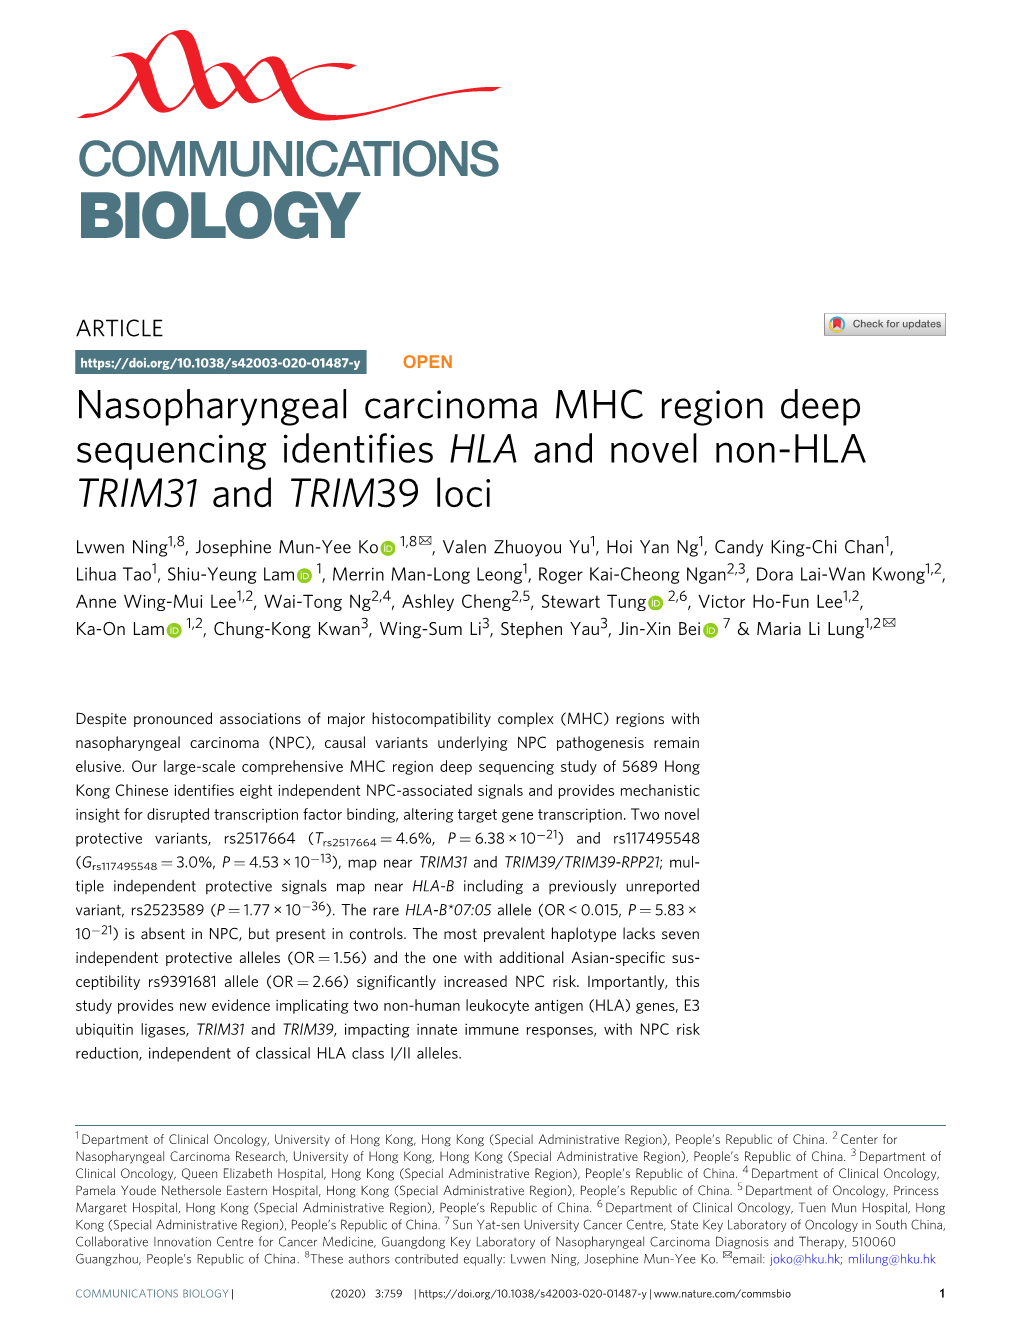 Nasopharyngeal Carcinoma MHC Region Deep Sequencing Identifies